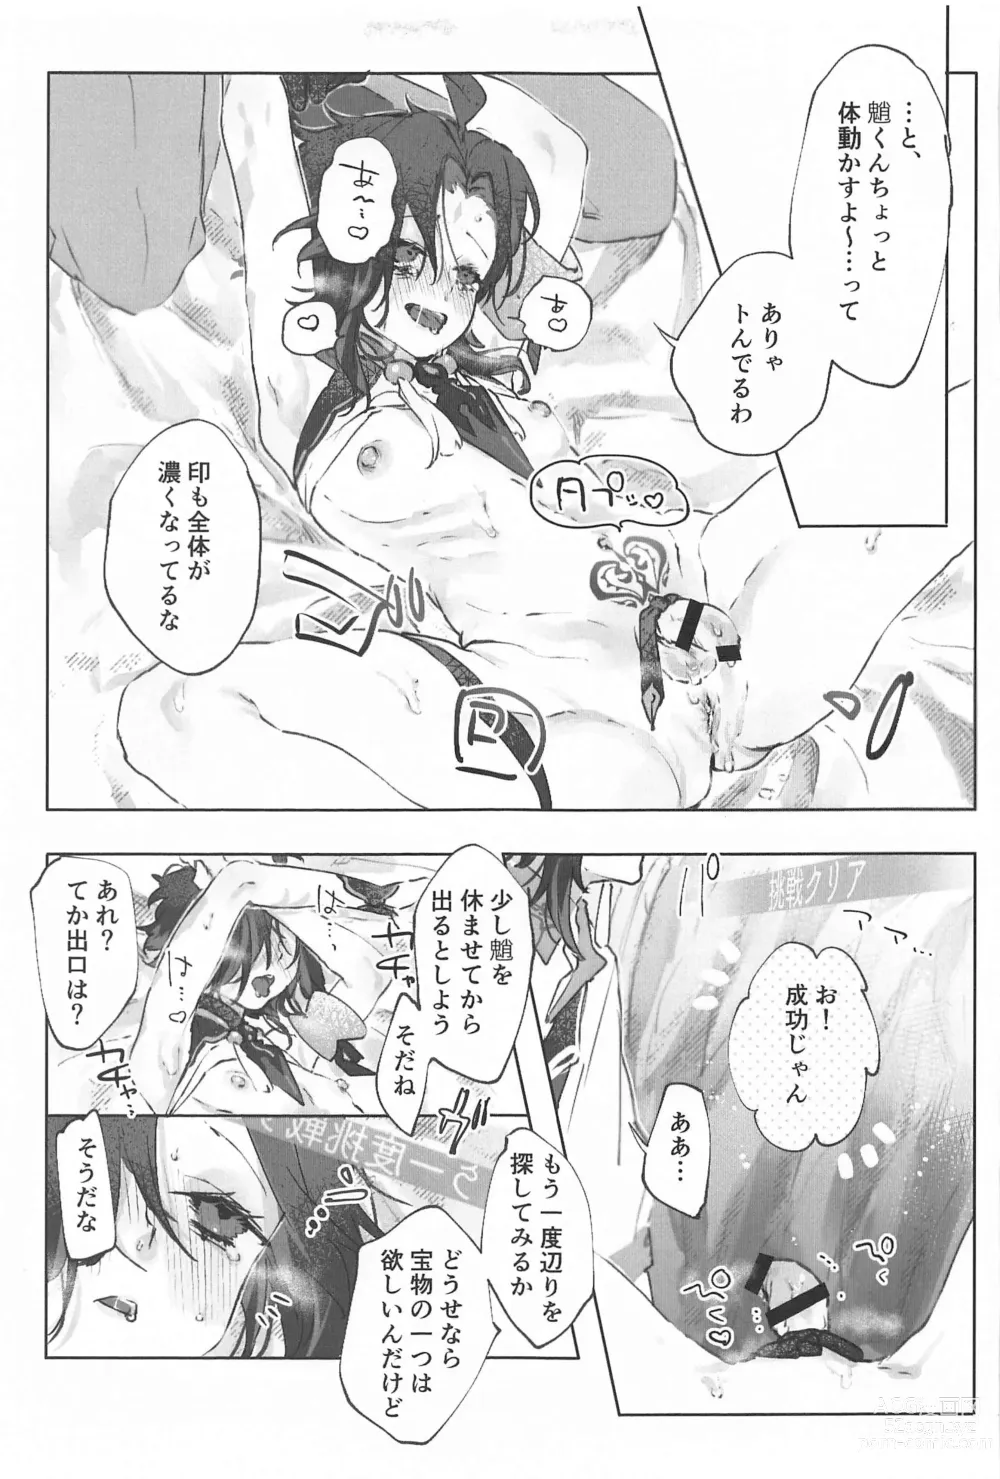 Page 43 of doujinshi Okawari.